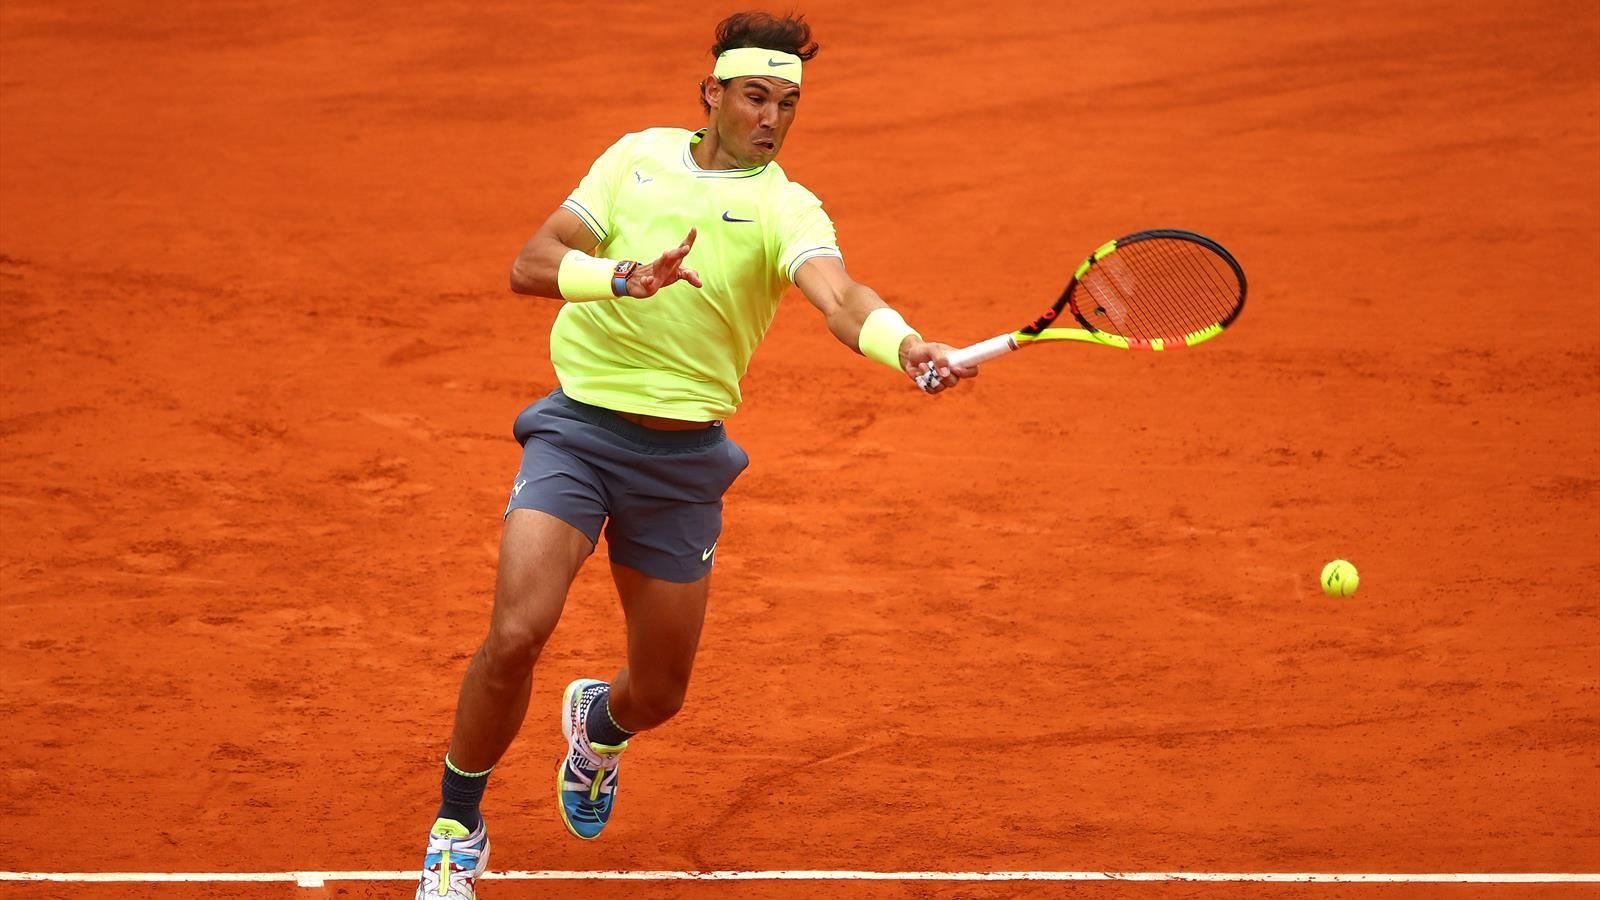 Rafael Nadal Roland Garros 2019 Wallpapers - Wallpaper Cave